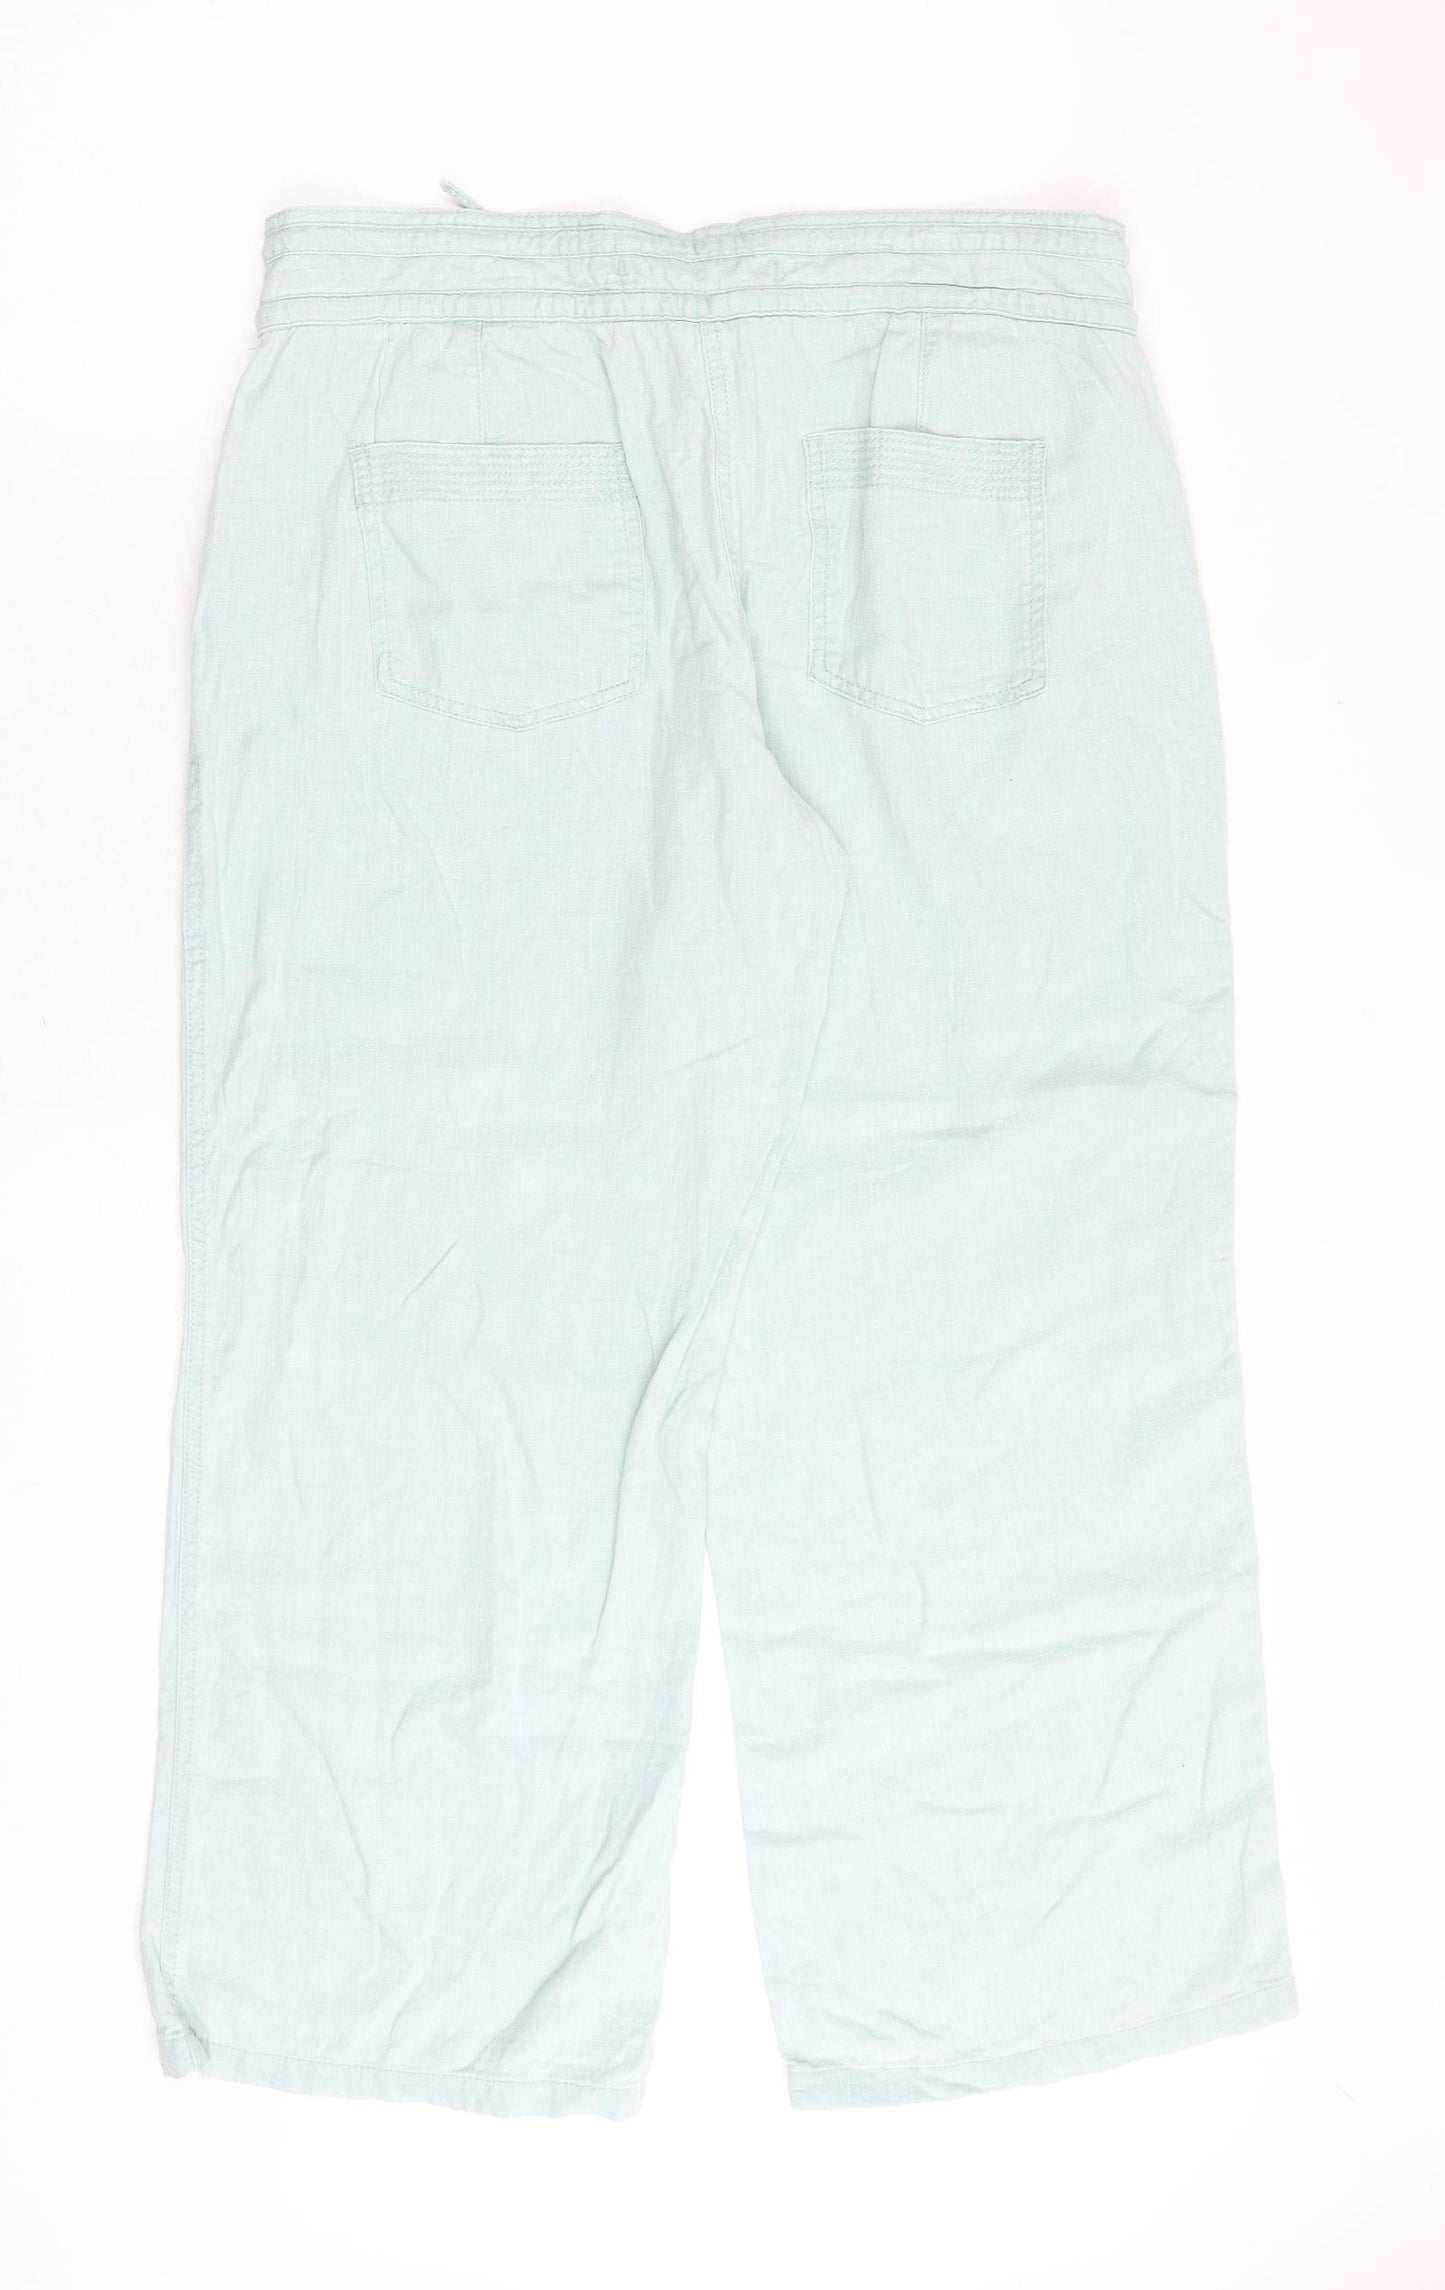 NEXT Womens Blue Viscose Trousers Size 16 Regular Zip - Lace Up Detail